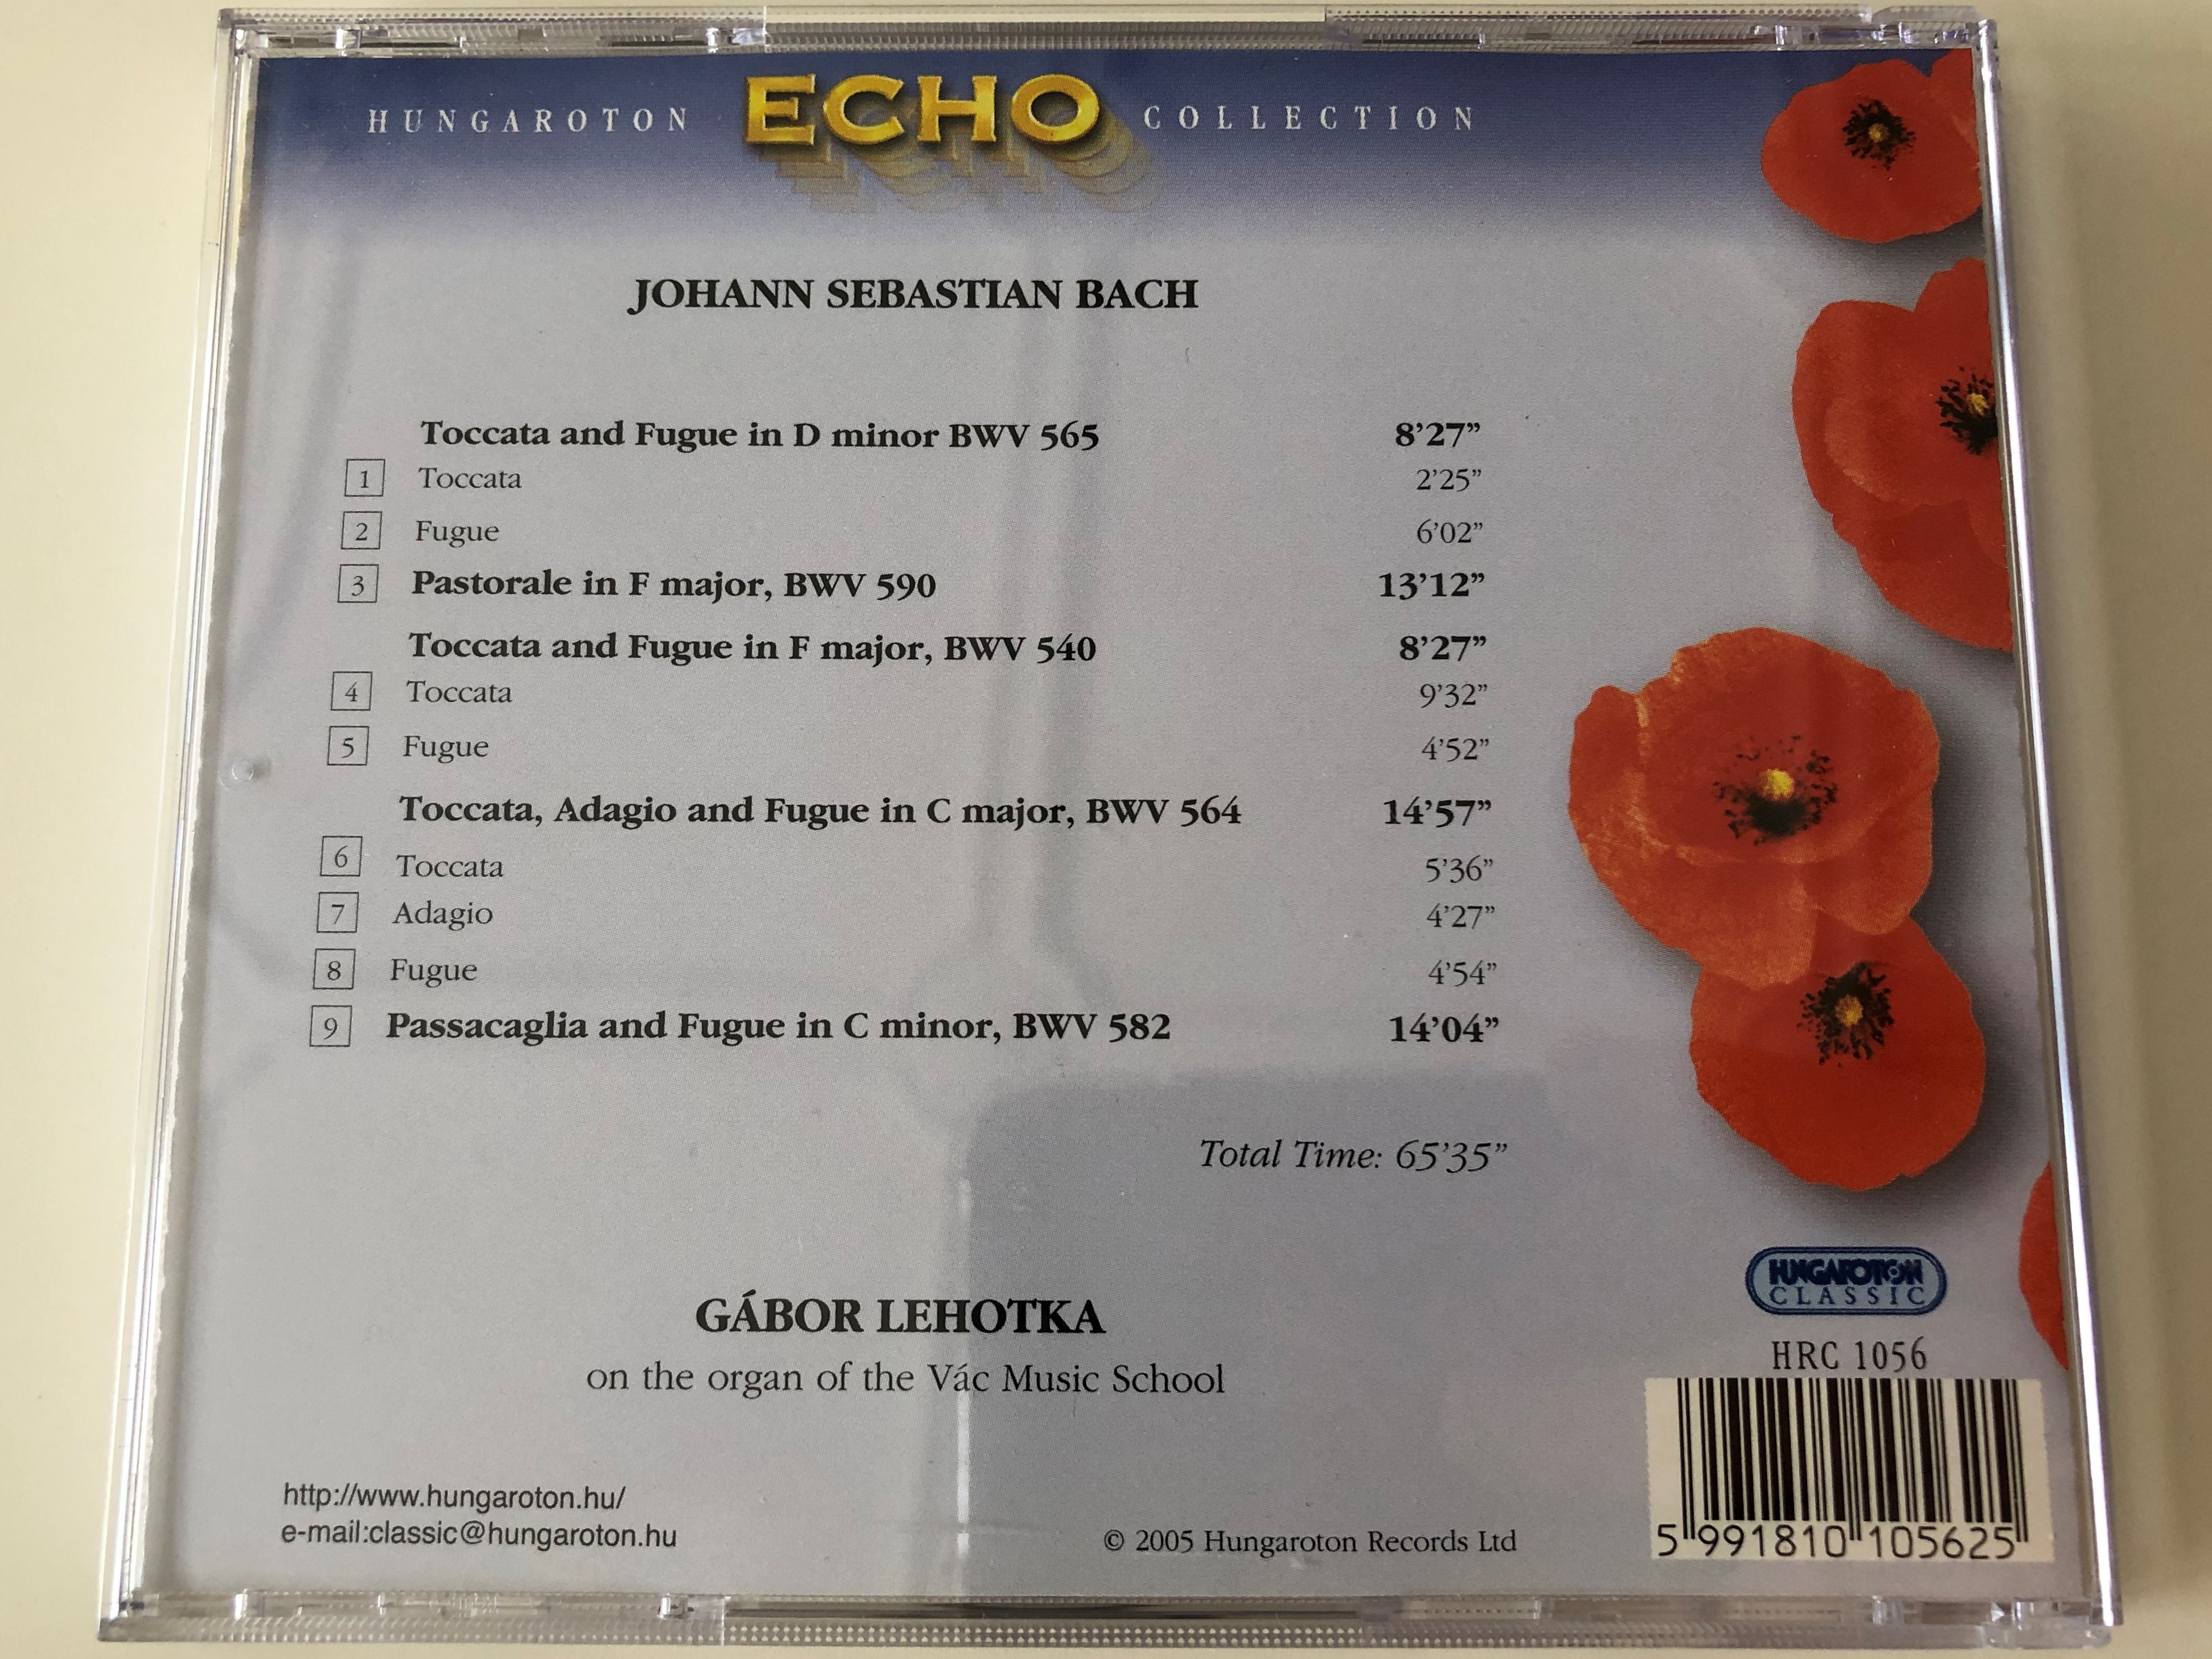 hungaroton-echo-collection-j.-s.-bach-toccata-fugue-in-d-minor-pastorale-in-f-major-toccata-adagio-fugue-in-c-major-gabor-lehotka-organ-hungaroton-classic-audio-cd-2005-stereo-4-.jpg